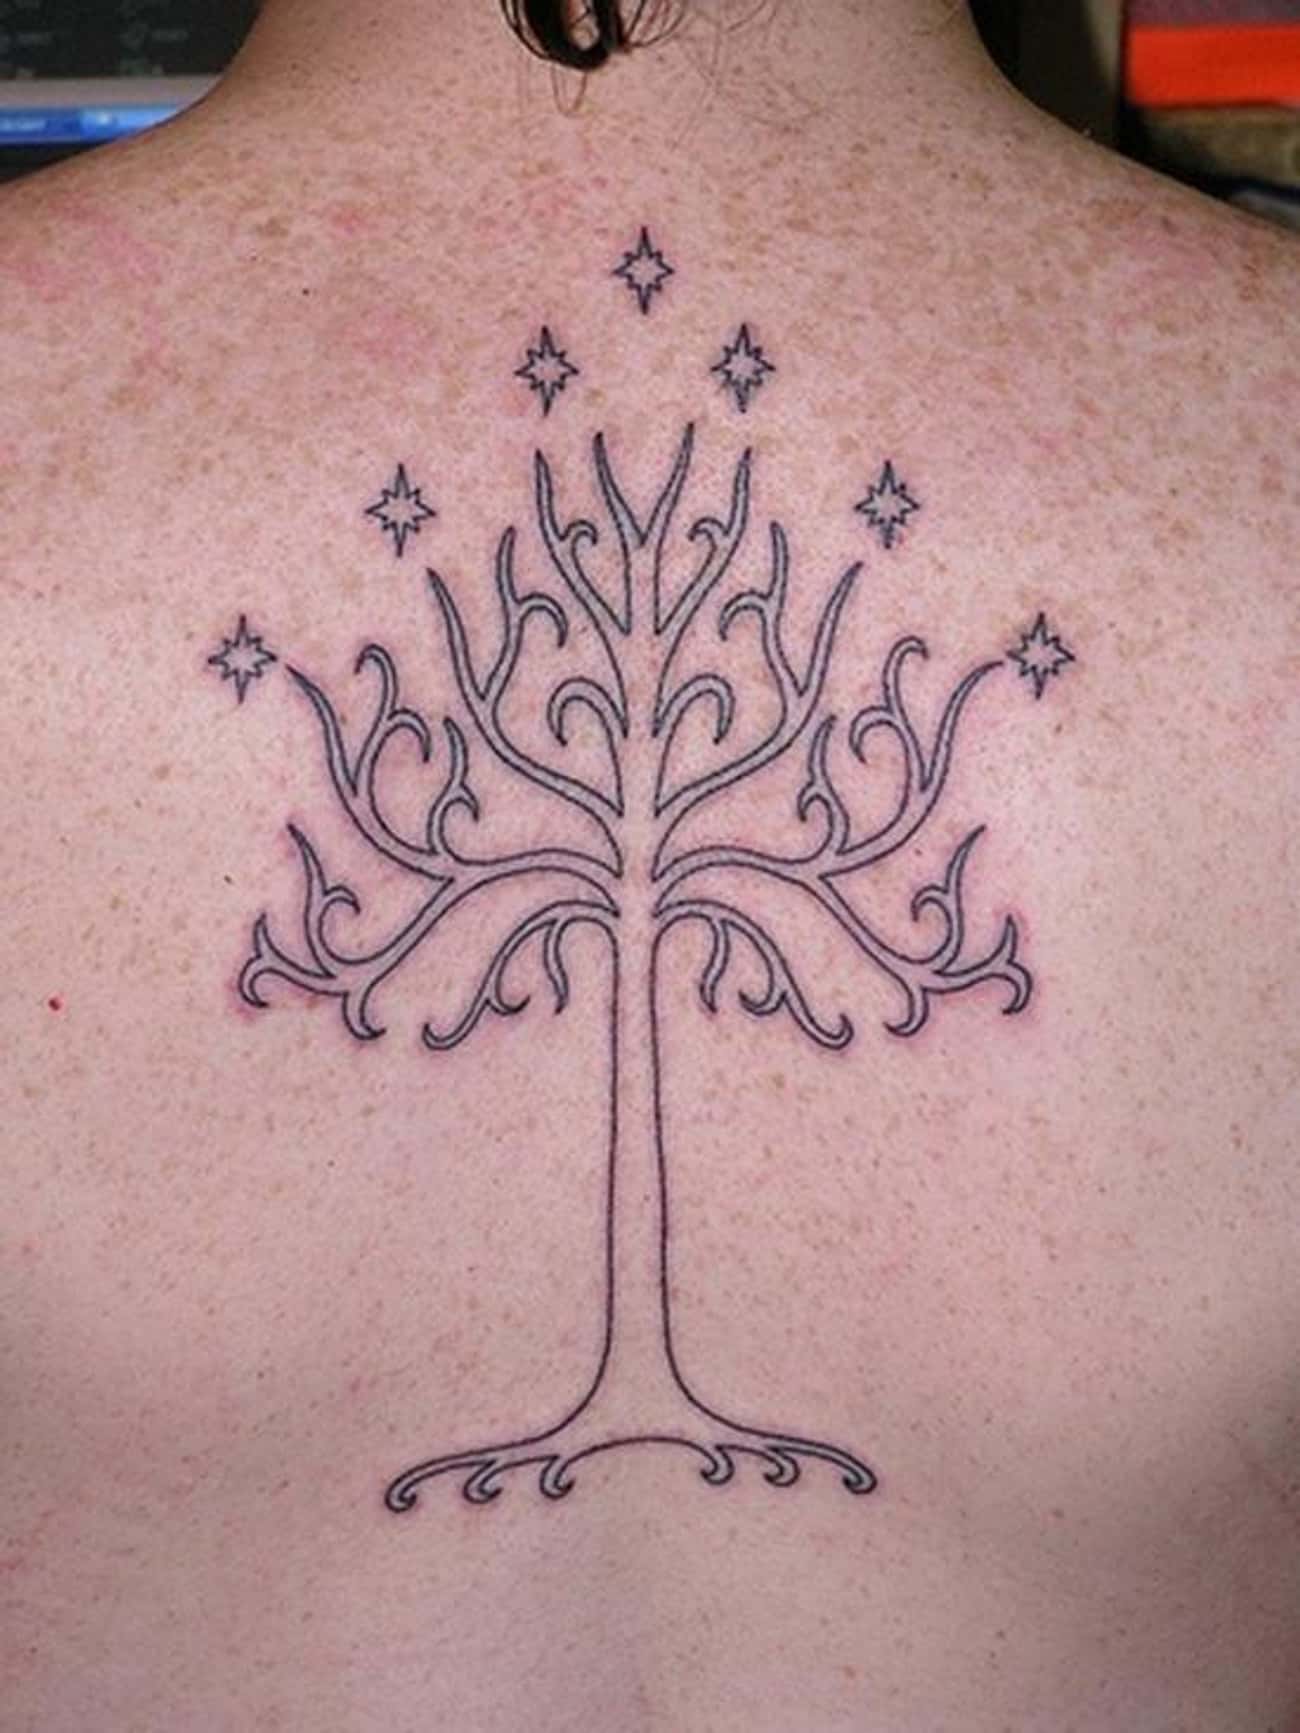 The White Tree of Gondor